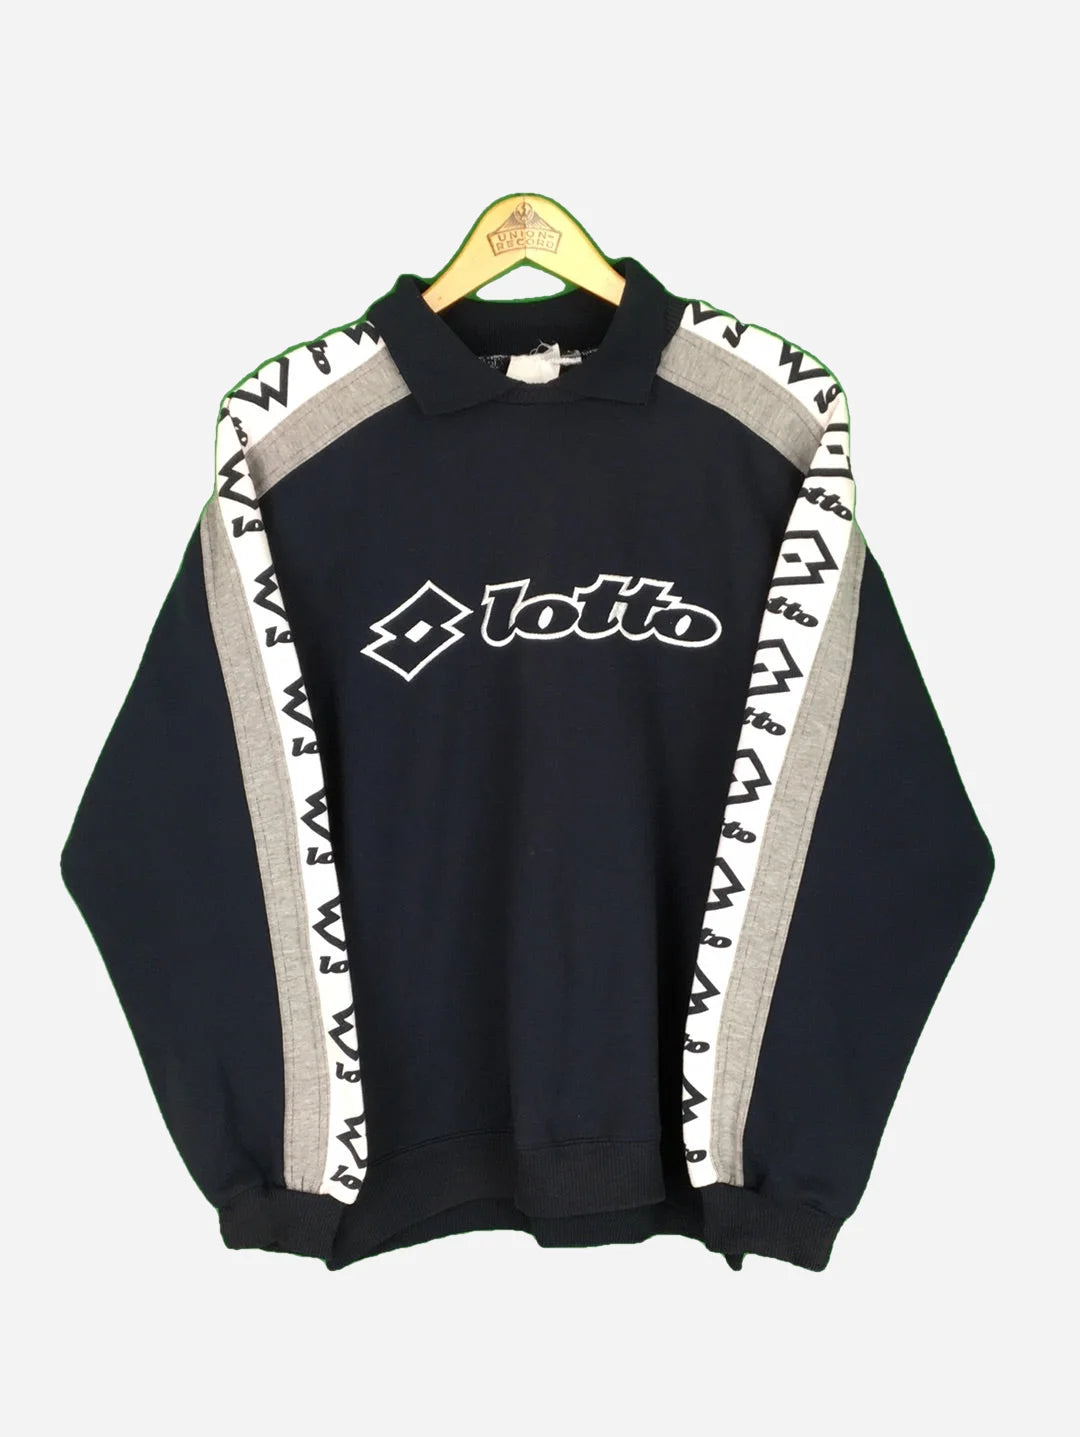 Lotto Sweater (M)